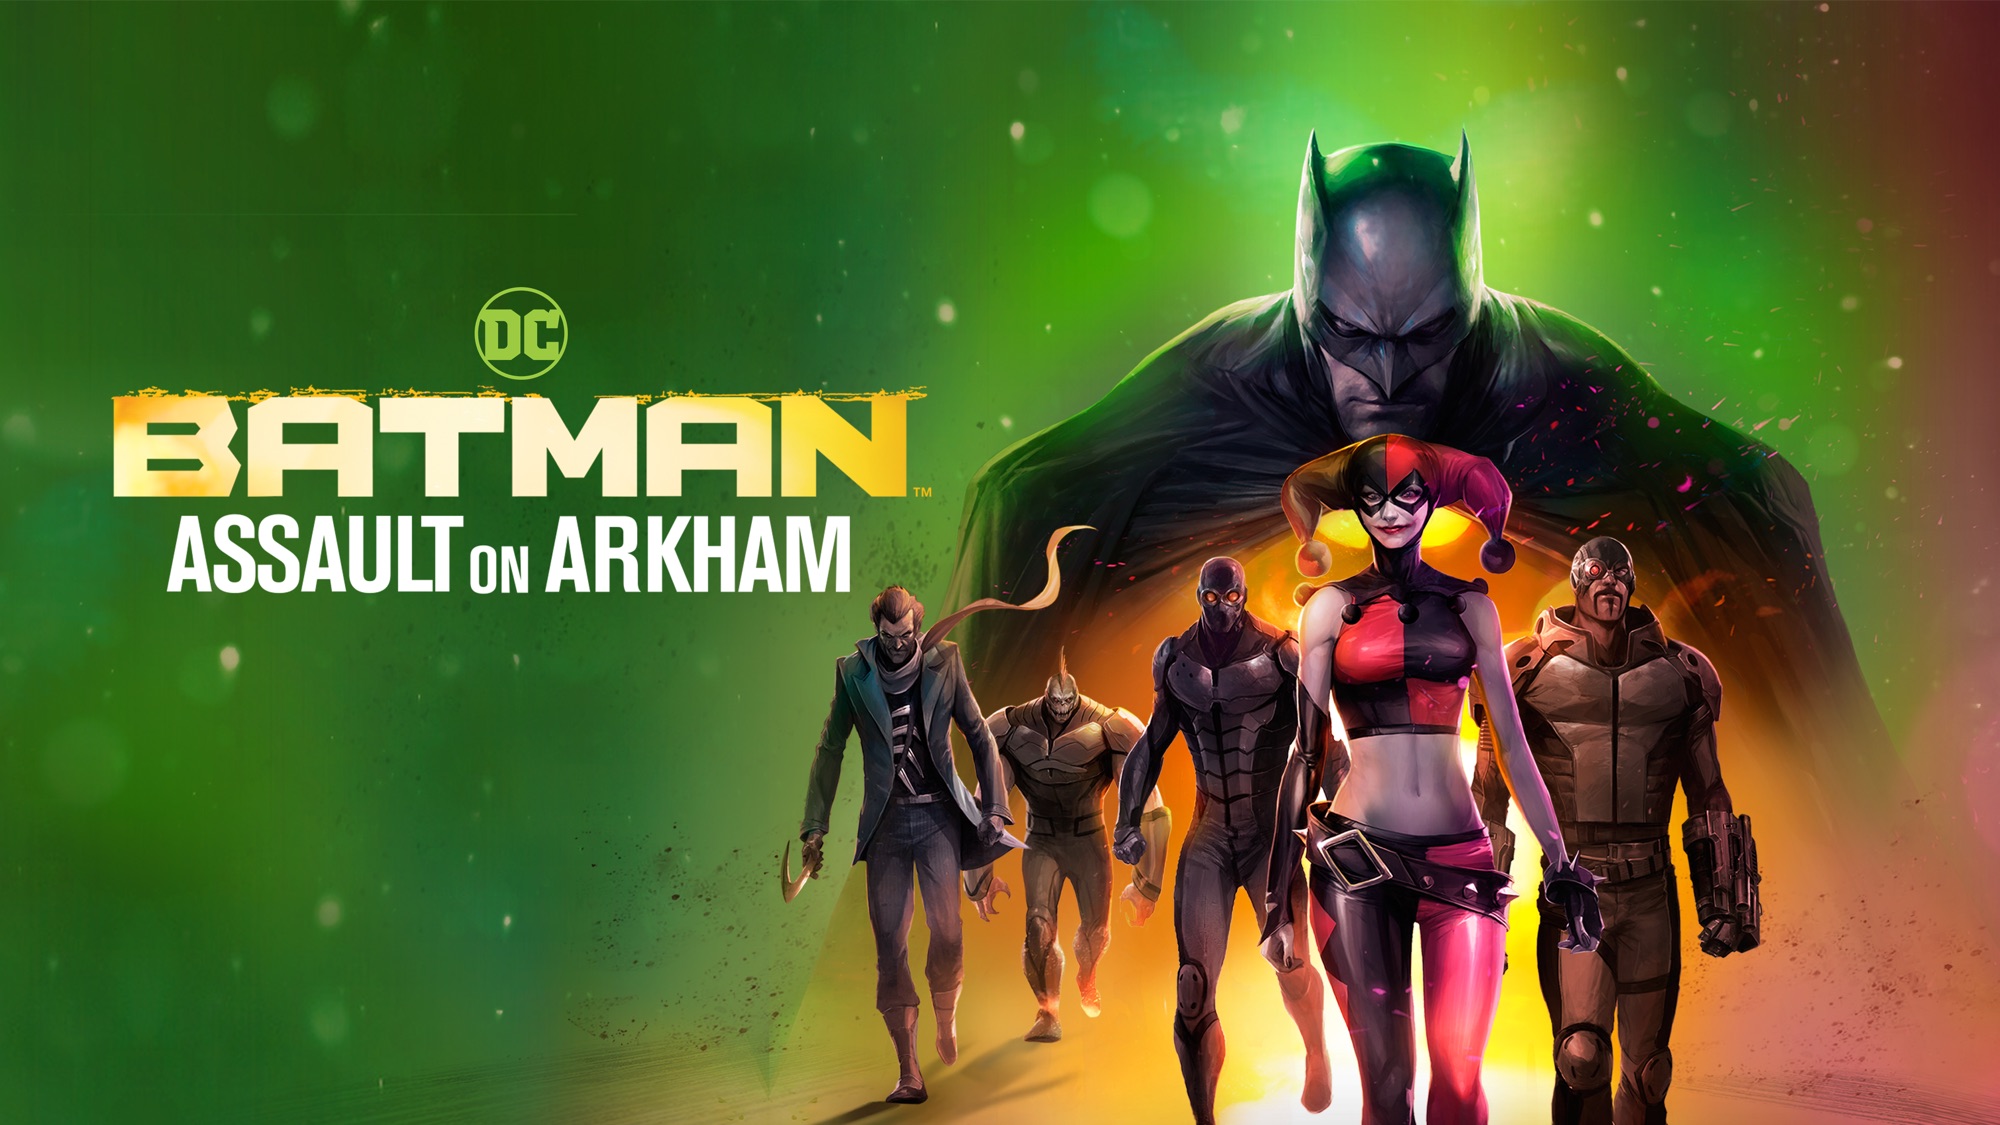 494856 descargar imagen películas, batman: asalto en arkham, the batman: fondos de pantalla y protectores de pantalla gratis